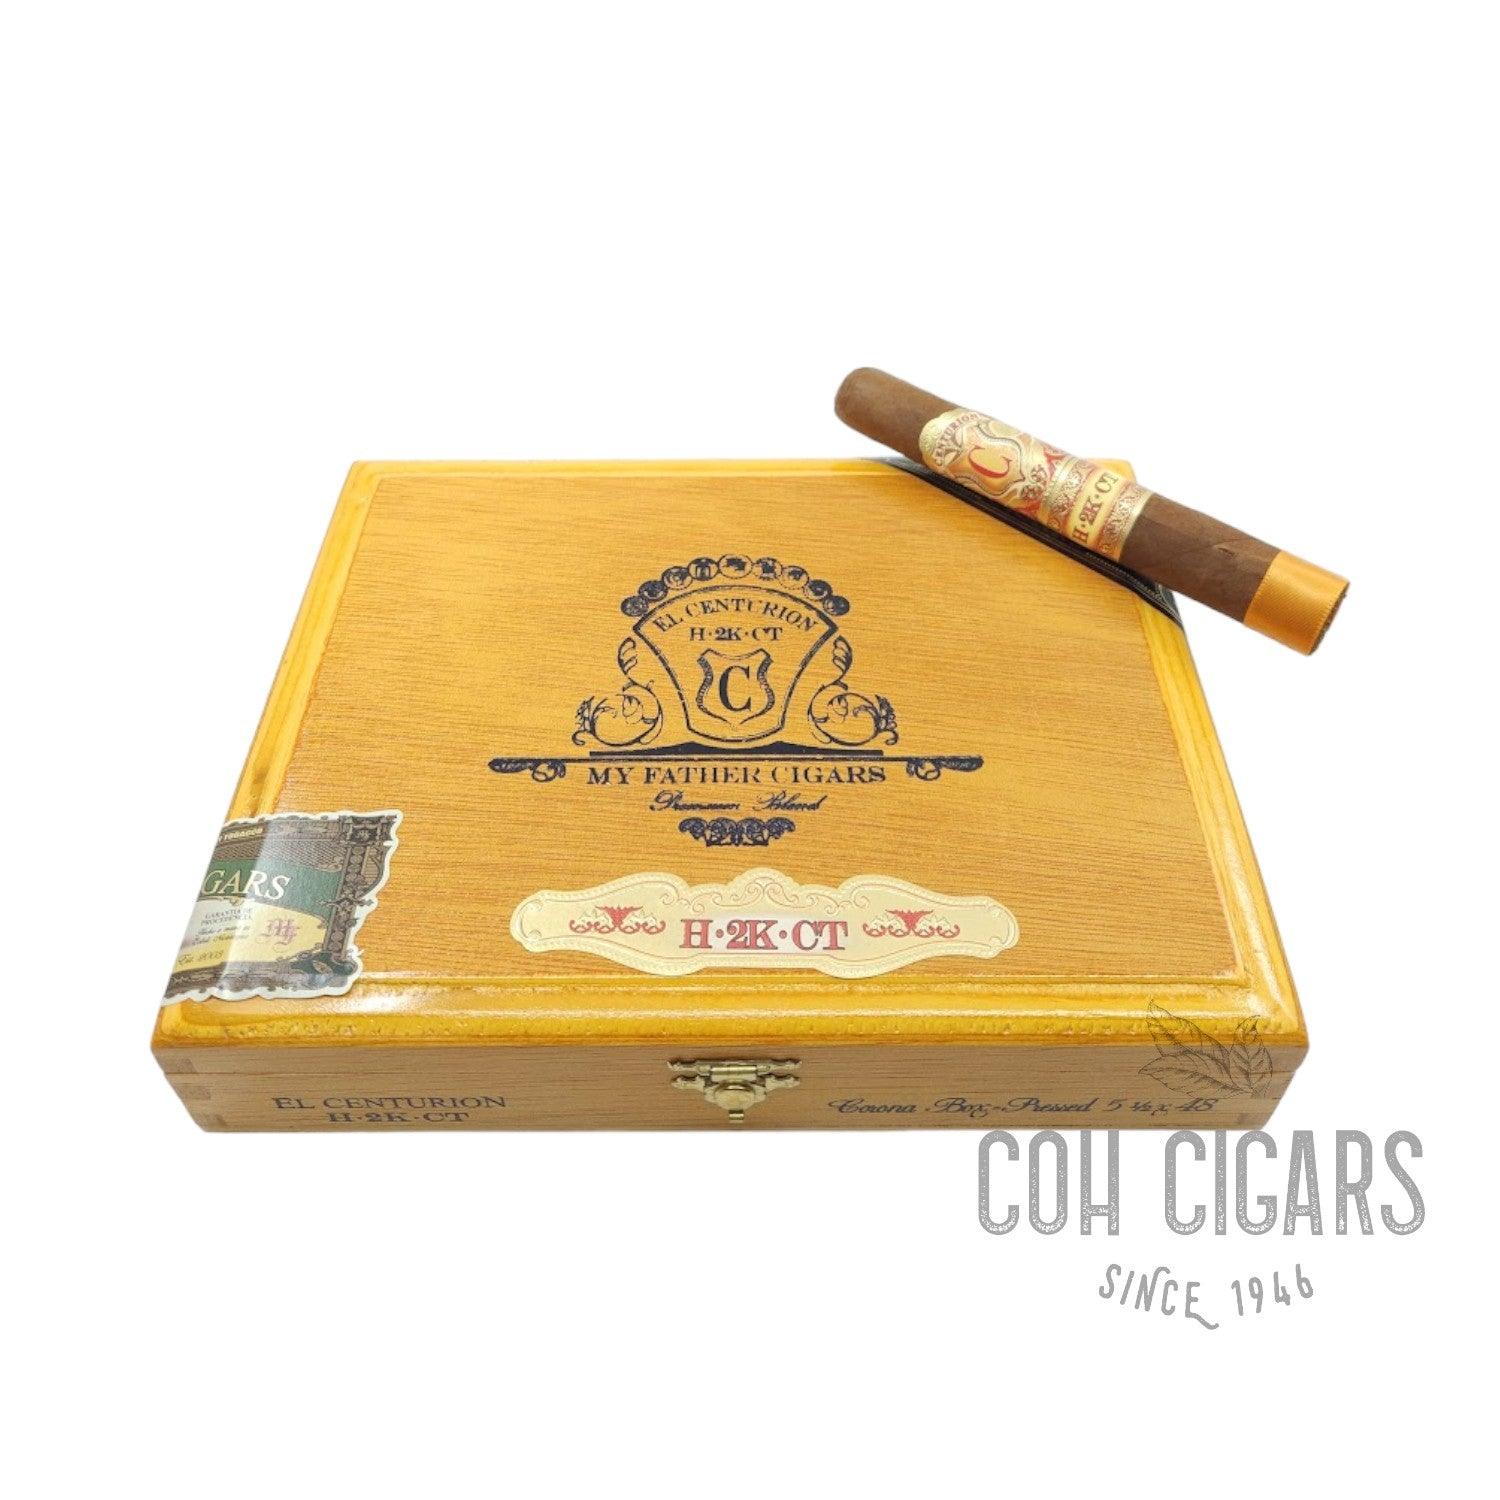 My Father Cigar | EL Centurion H.2K.CT Corona Box Pressed | Box 20 - hk.cohcigars